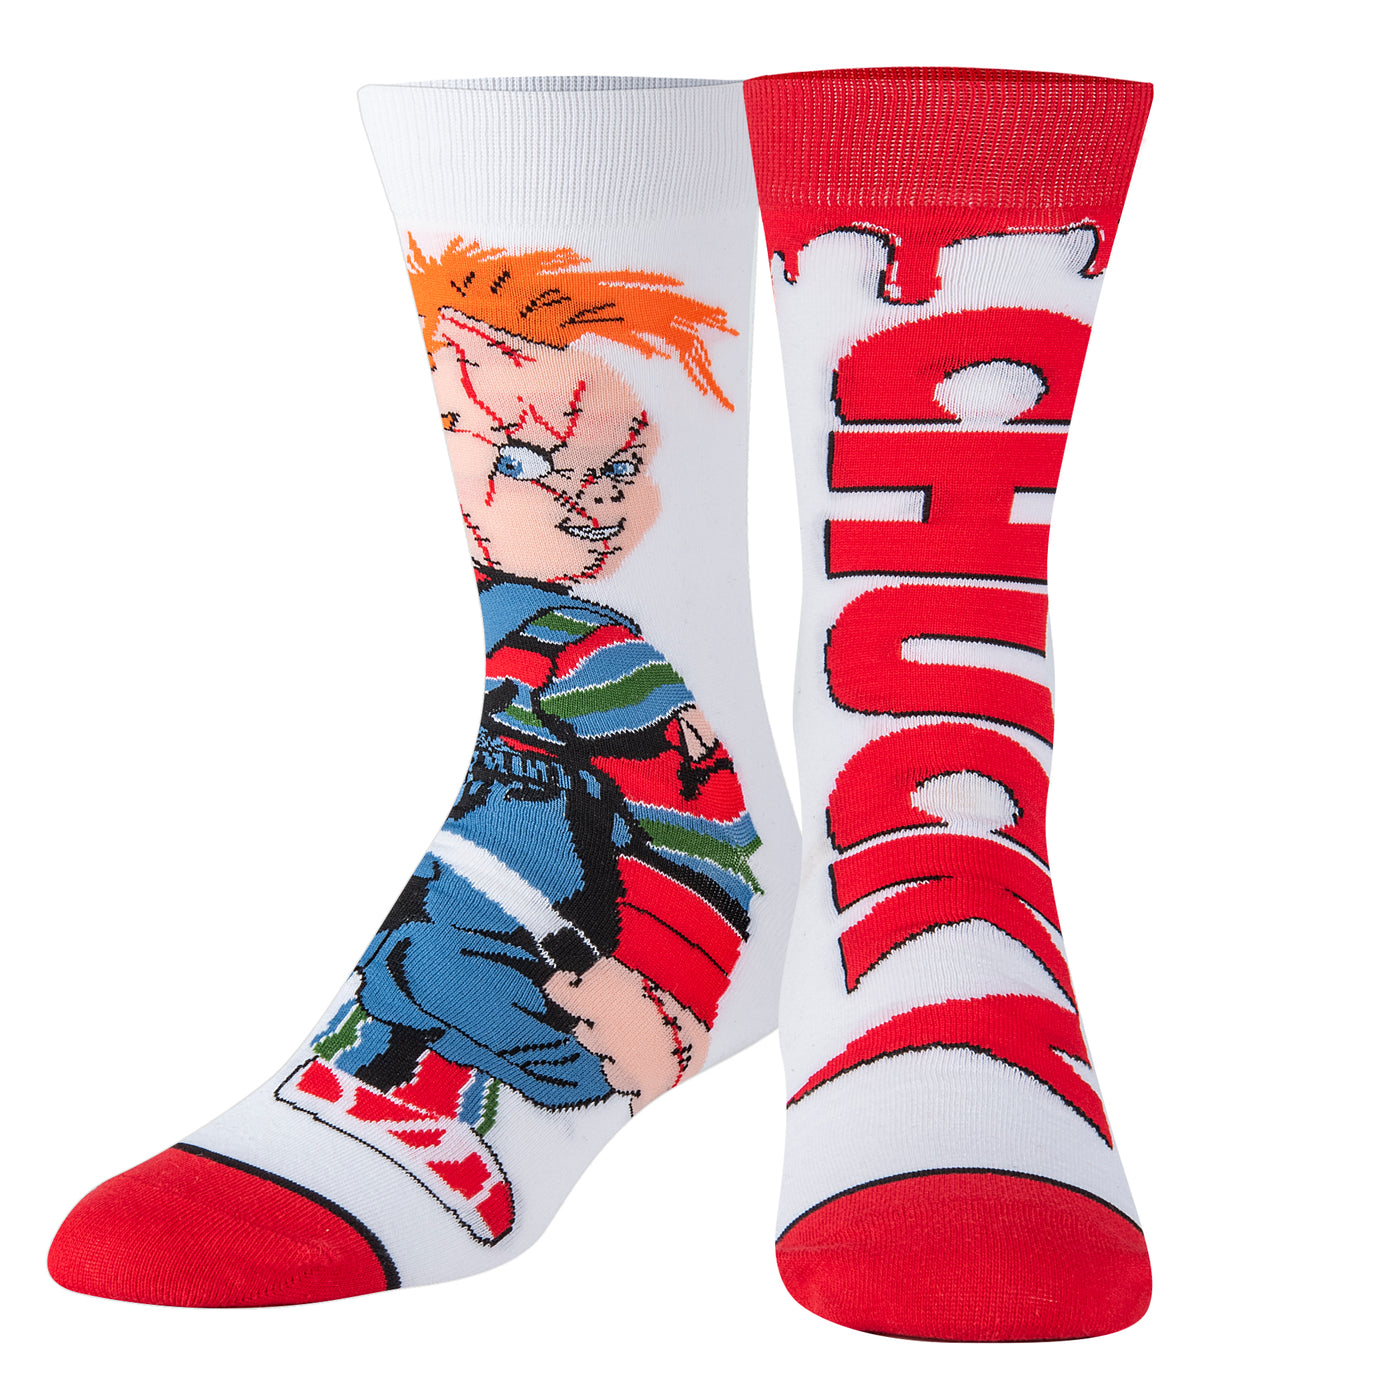 Chuckys Revenge Crew Socks